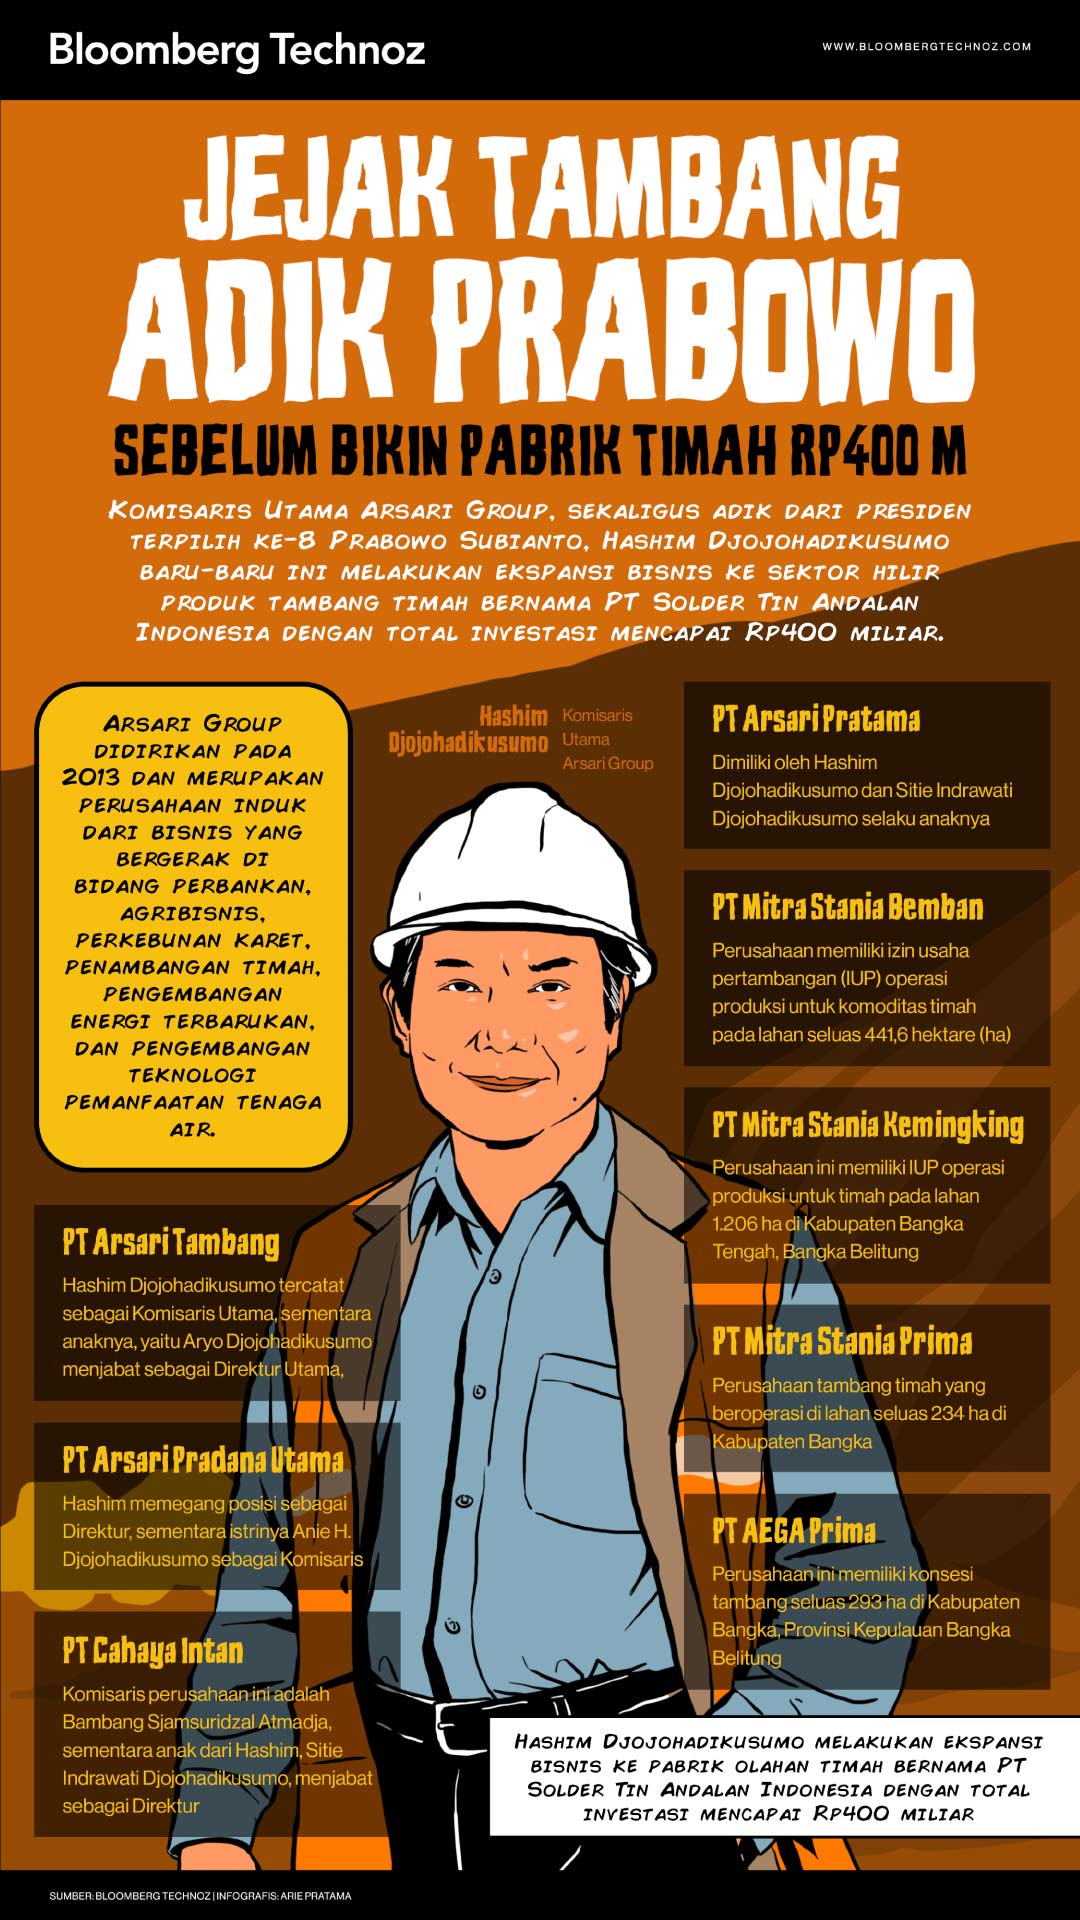 Jejak Tambang Adik Prabowo Sebelum Bikin Pabrik Timah Rp400 M (Bloomberg Technoz/Arie Pratama)